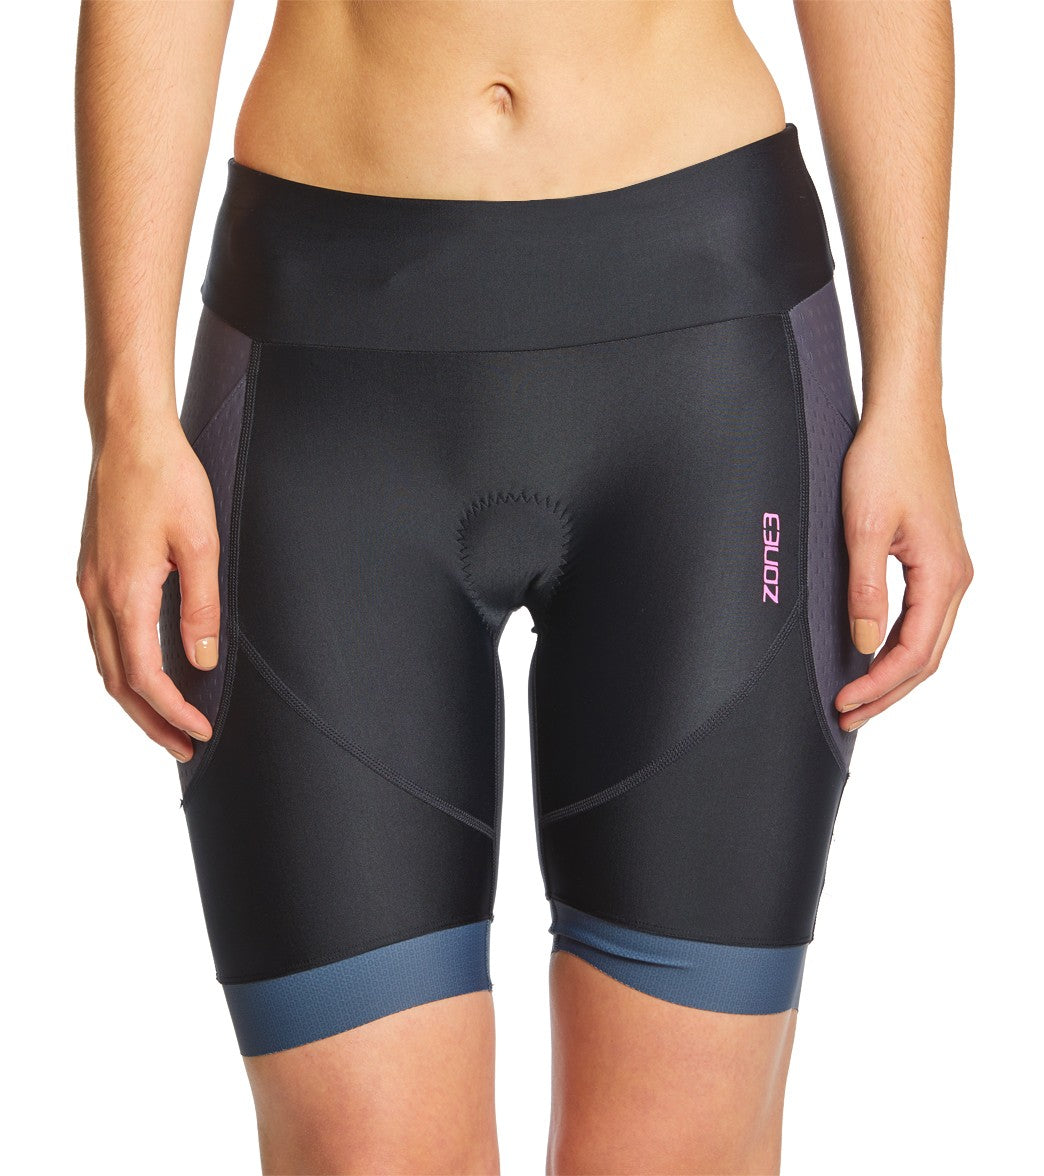 Zone3 Women's Aquaflo Plus Tri Shorts - Black/Grey/Neon Pink X-Small - Swimoutlet.com